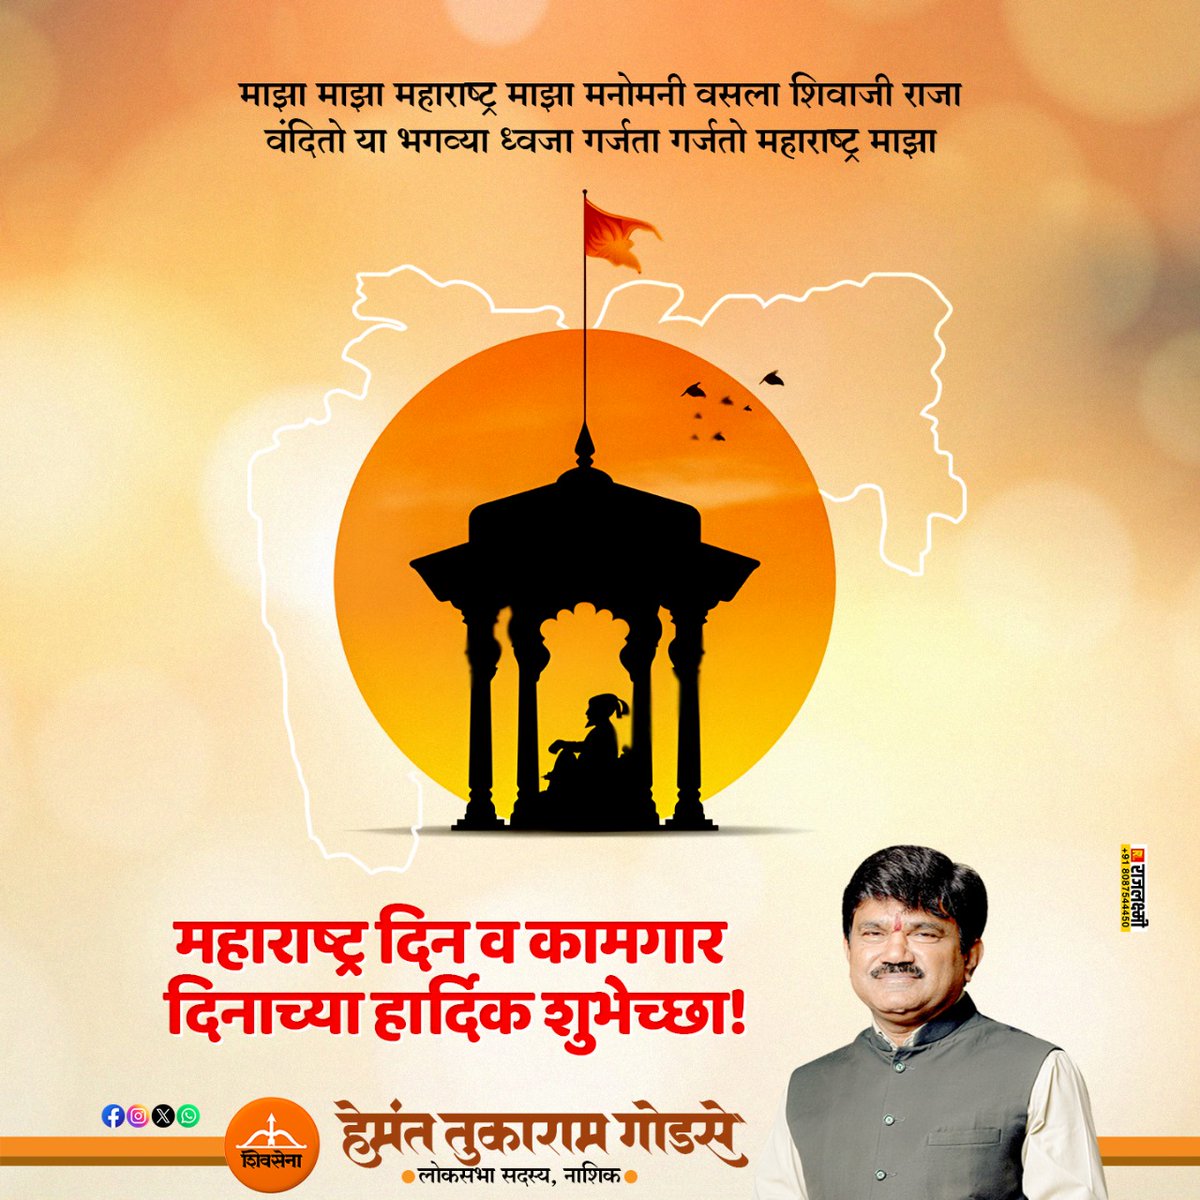 मंगल देशा,पवित्र देशा,महाराष्ट्र देशा प्रणाम घ्यावा माझा हा महाराष्ट्र देशा 🙏 महाराष्ट्र दिनाच्या हार्दिक शुभेच्छा🚩 #MaharashtraDay